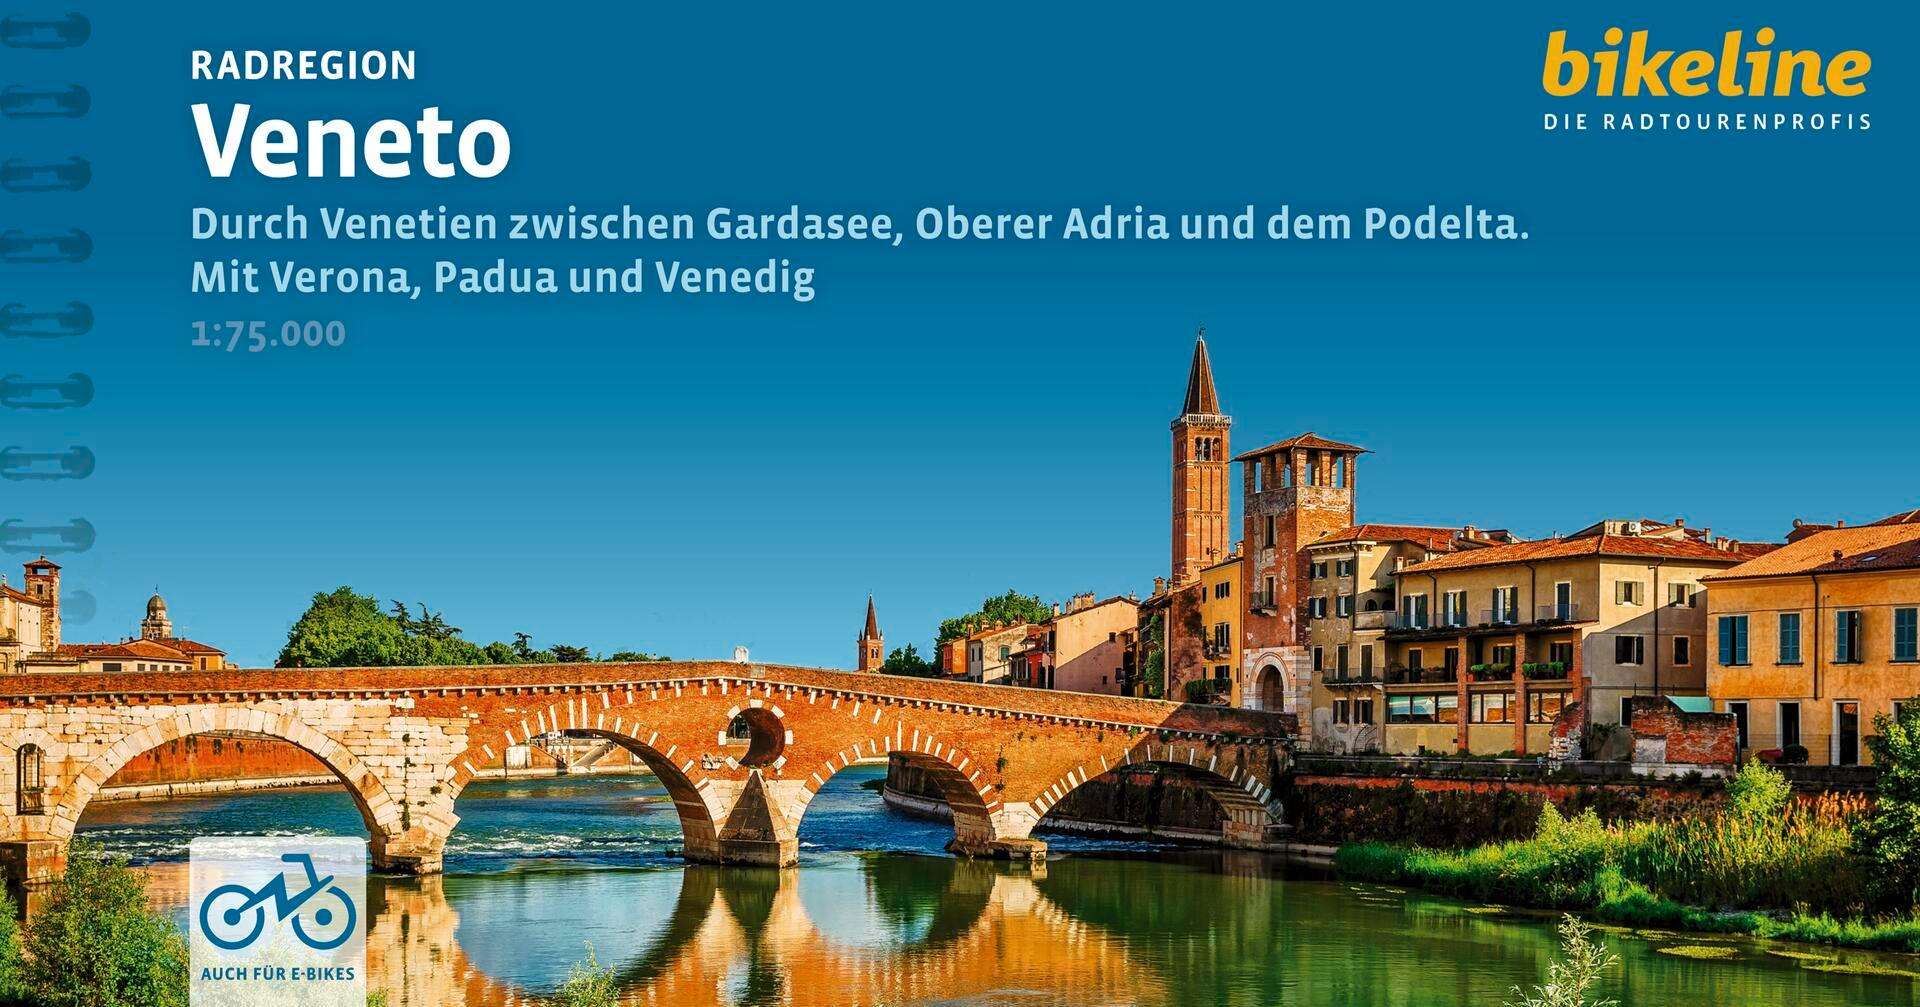 Online bestellen: Fietsgids Bikeline Radregion Veneto | Esterbauer